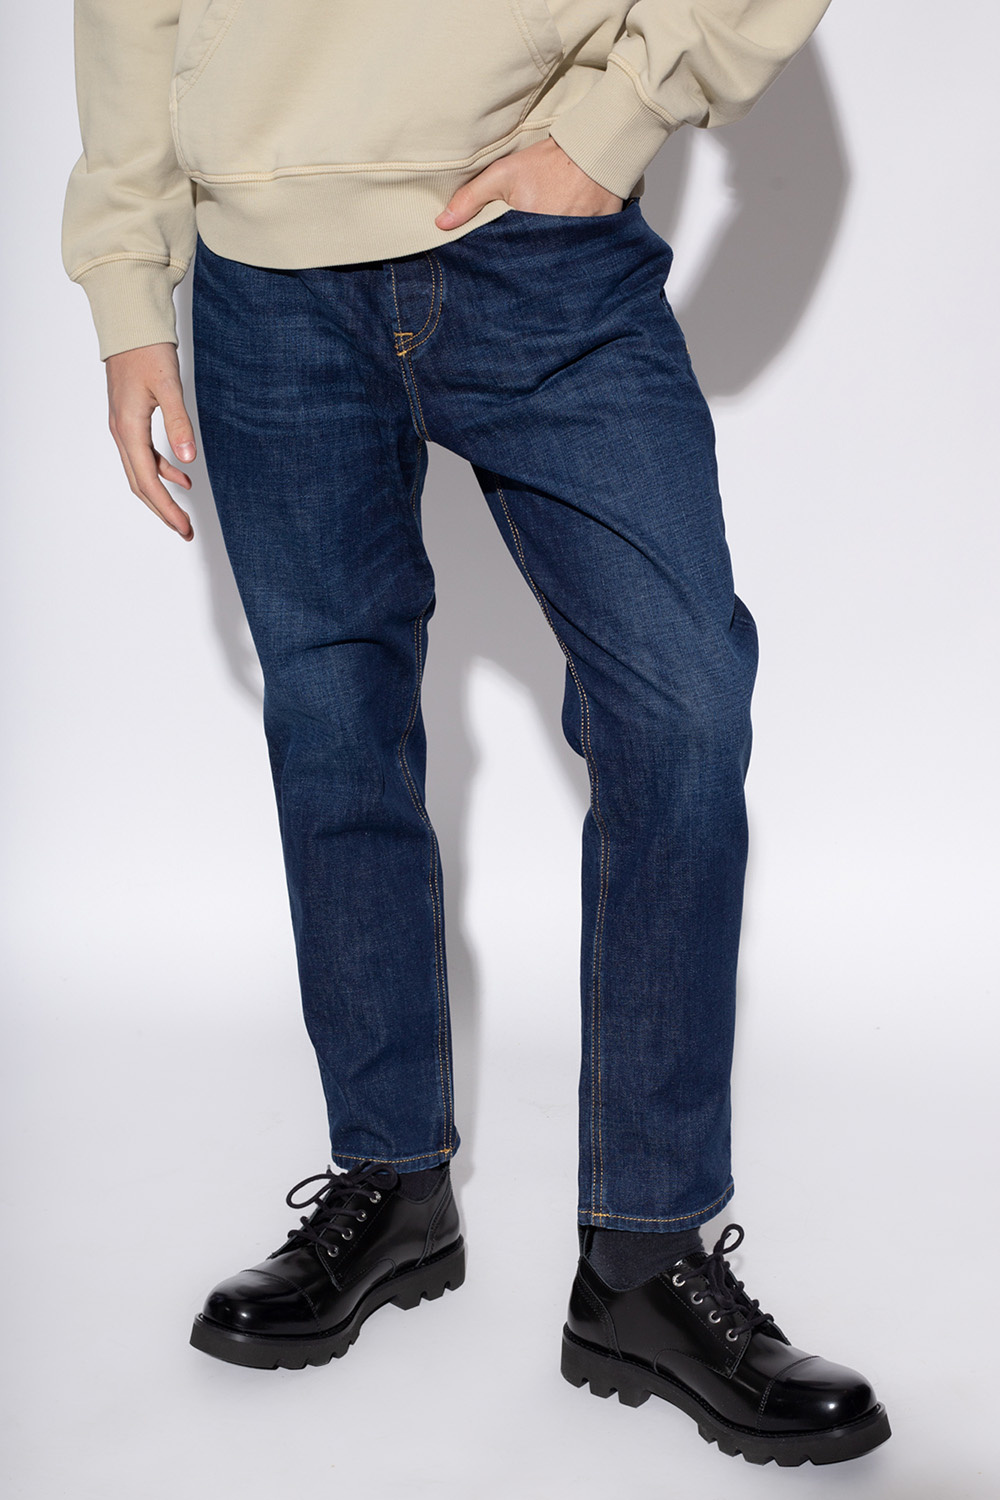 Diesel 'D | Men's Clothing | bustier puffball peplum dress - Fining' jeans  - JmksportShops